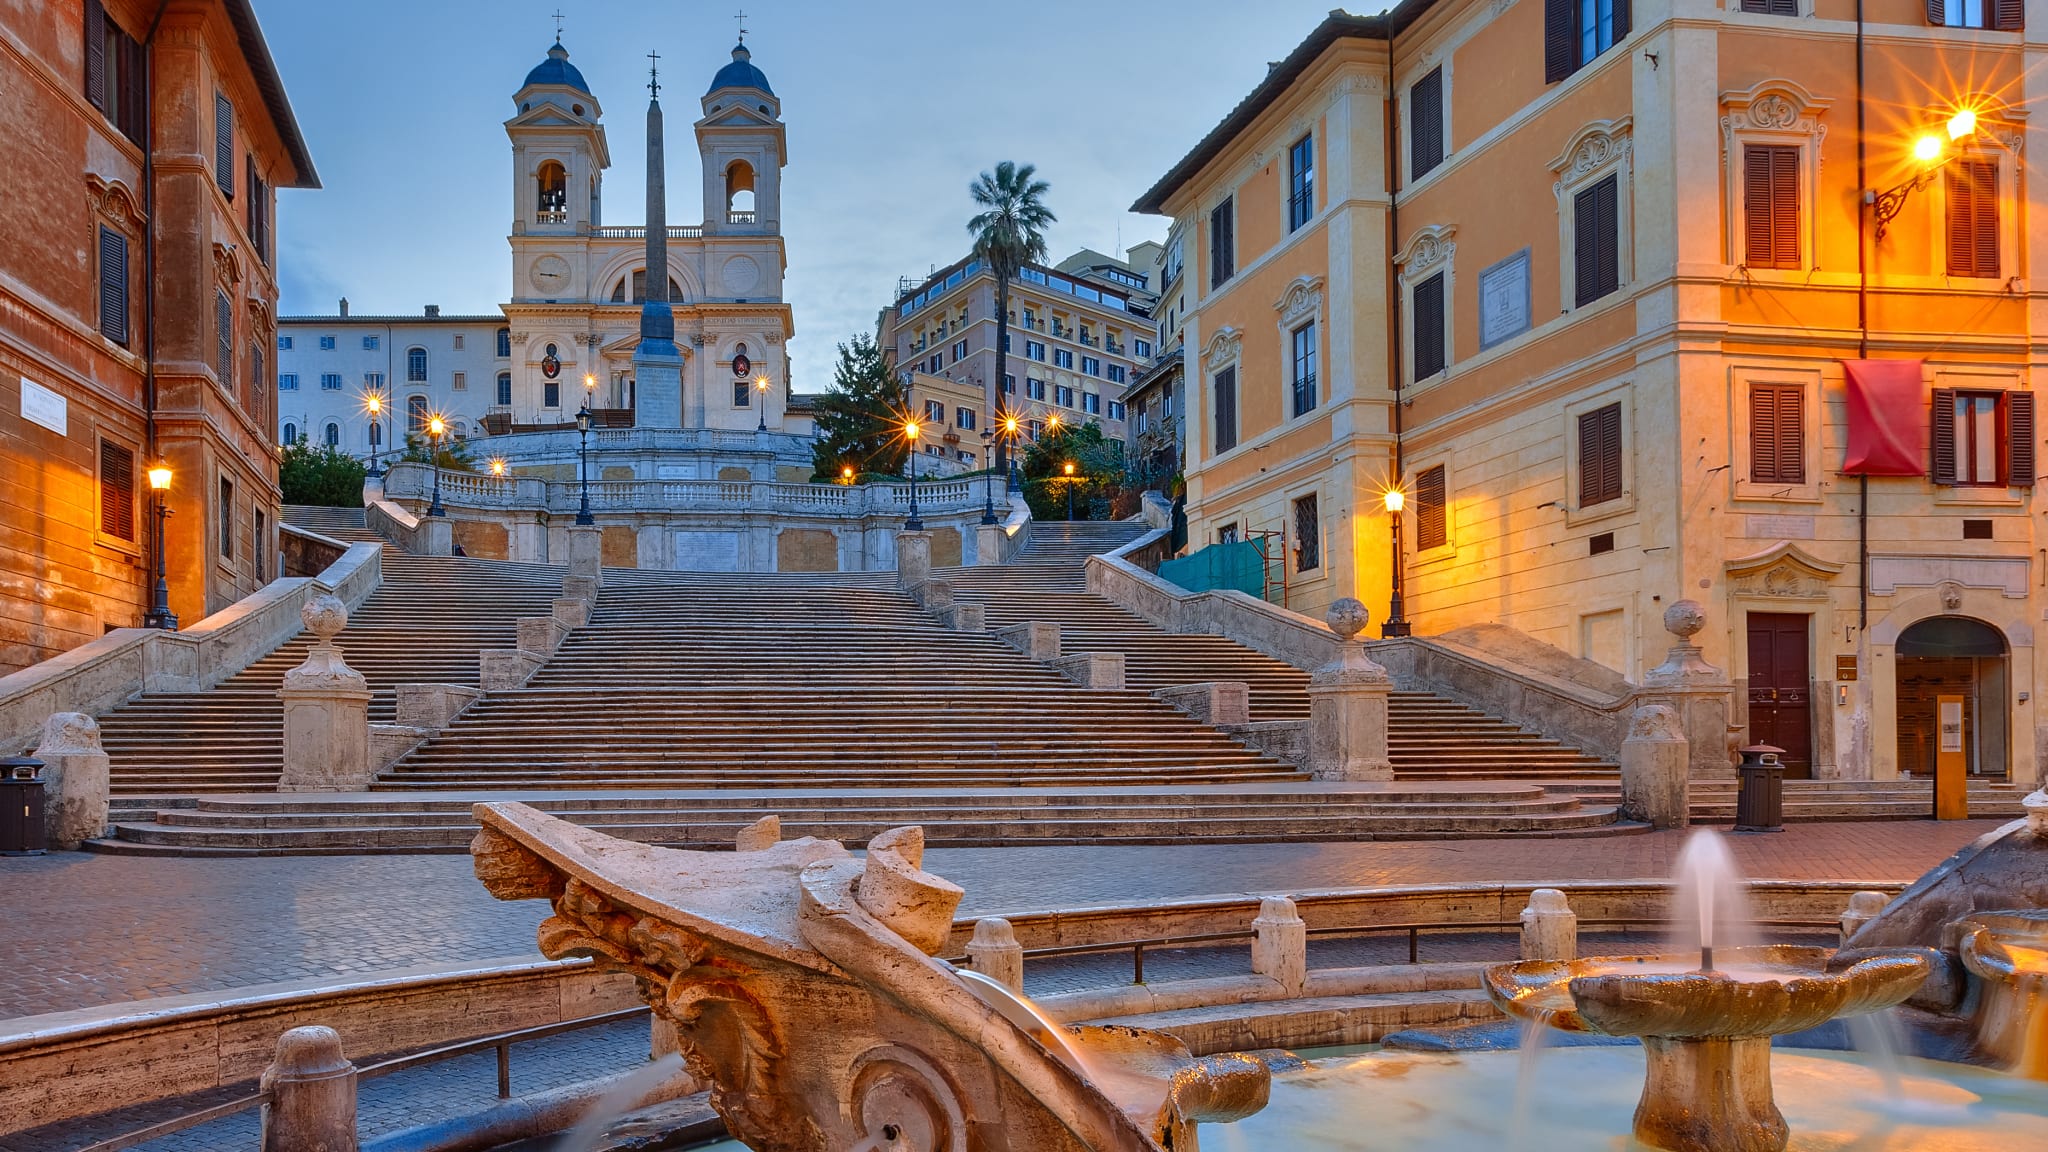 Spanische Treppe, Piazza di Spagna, Rom